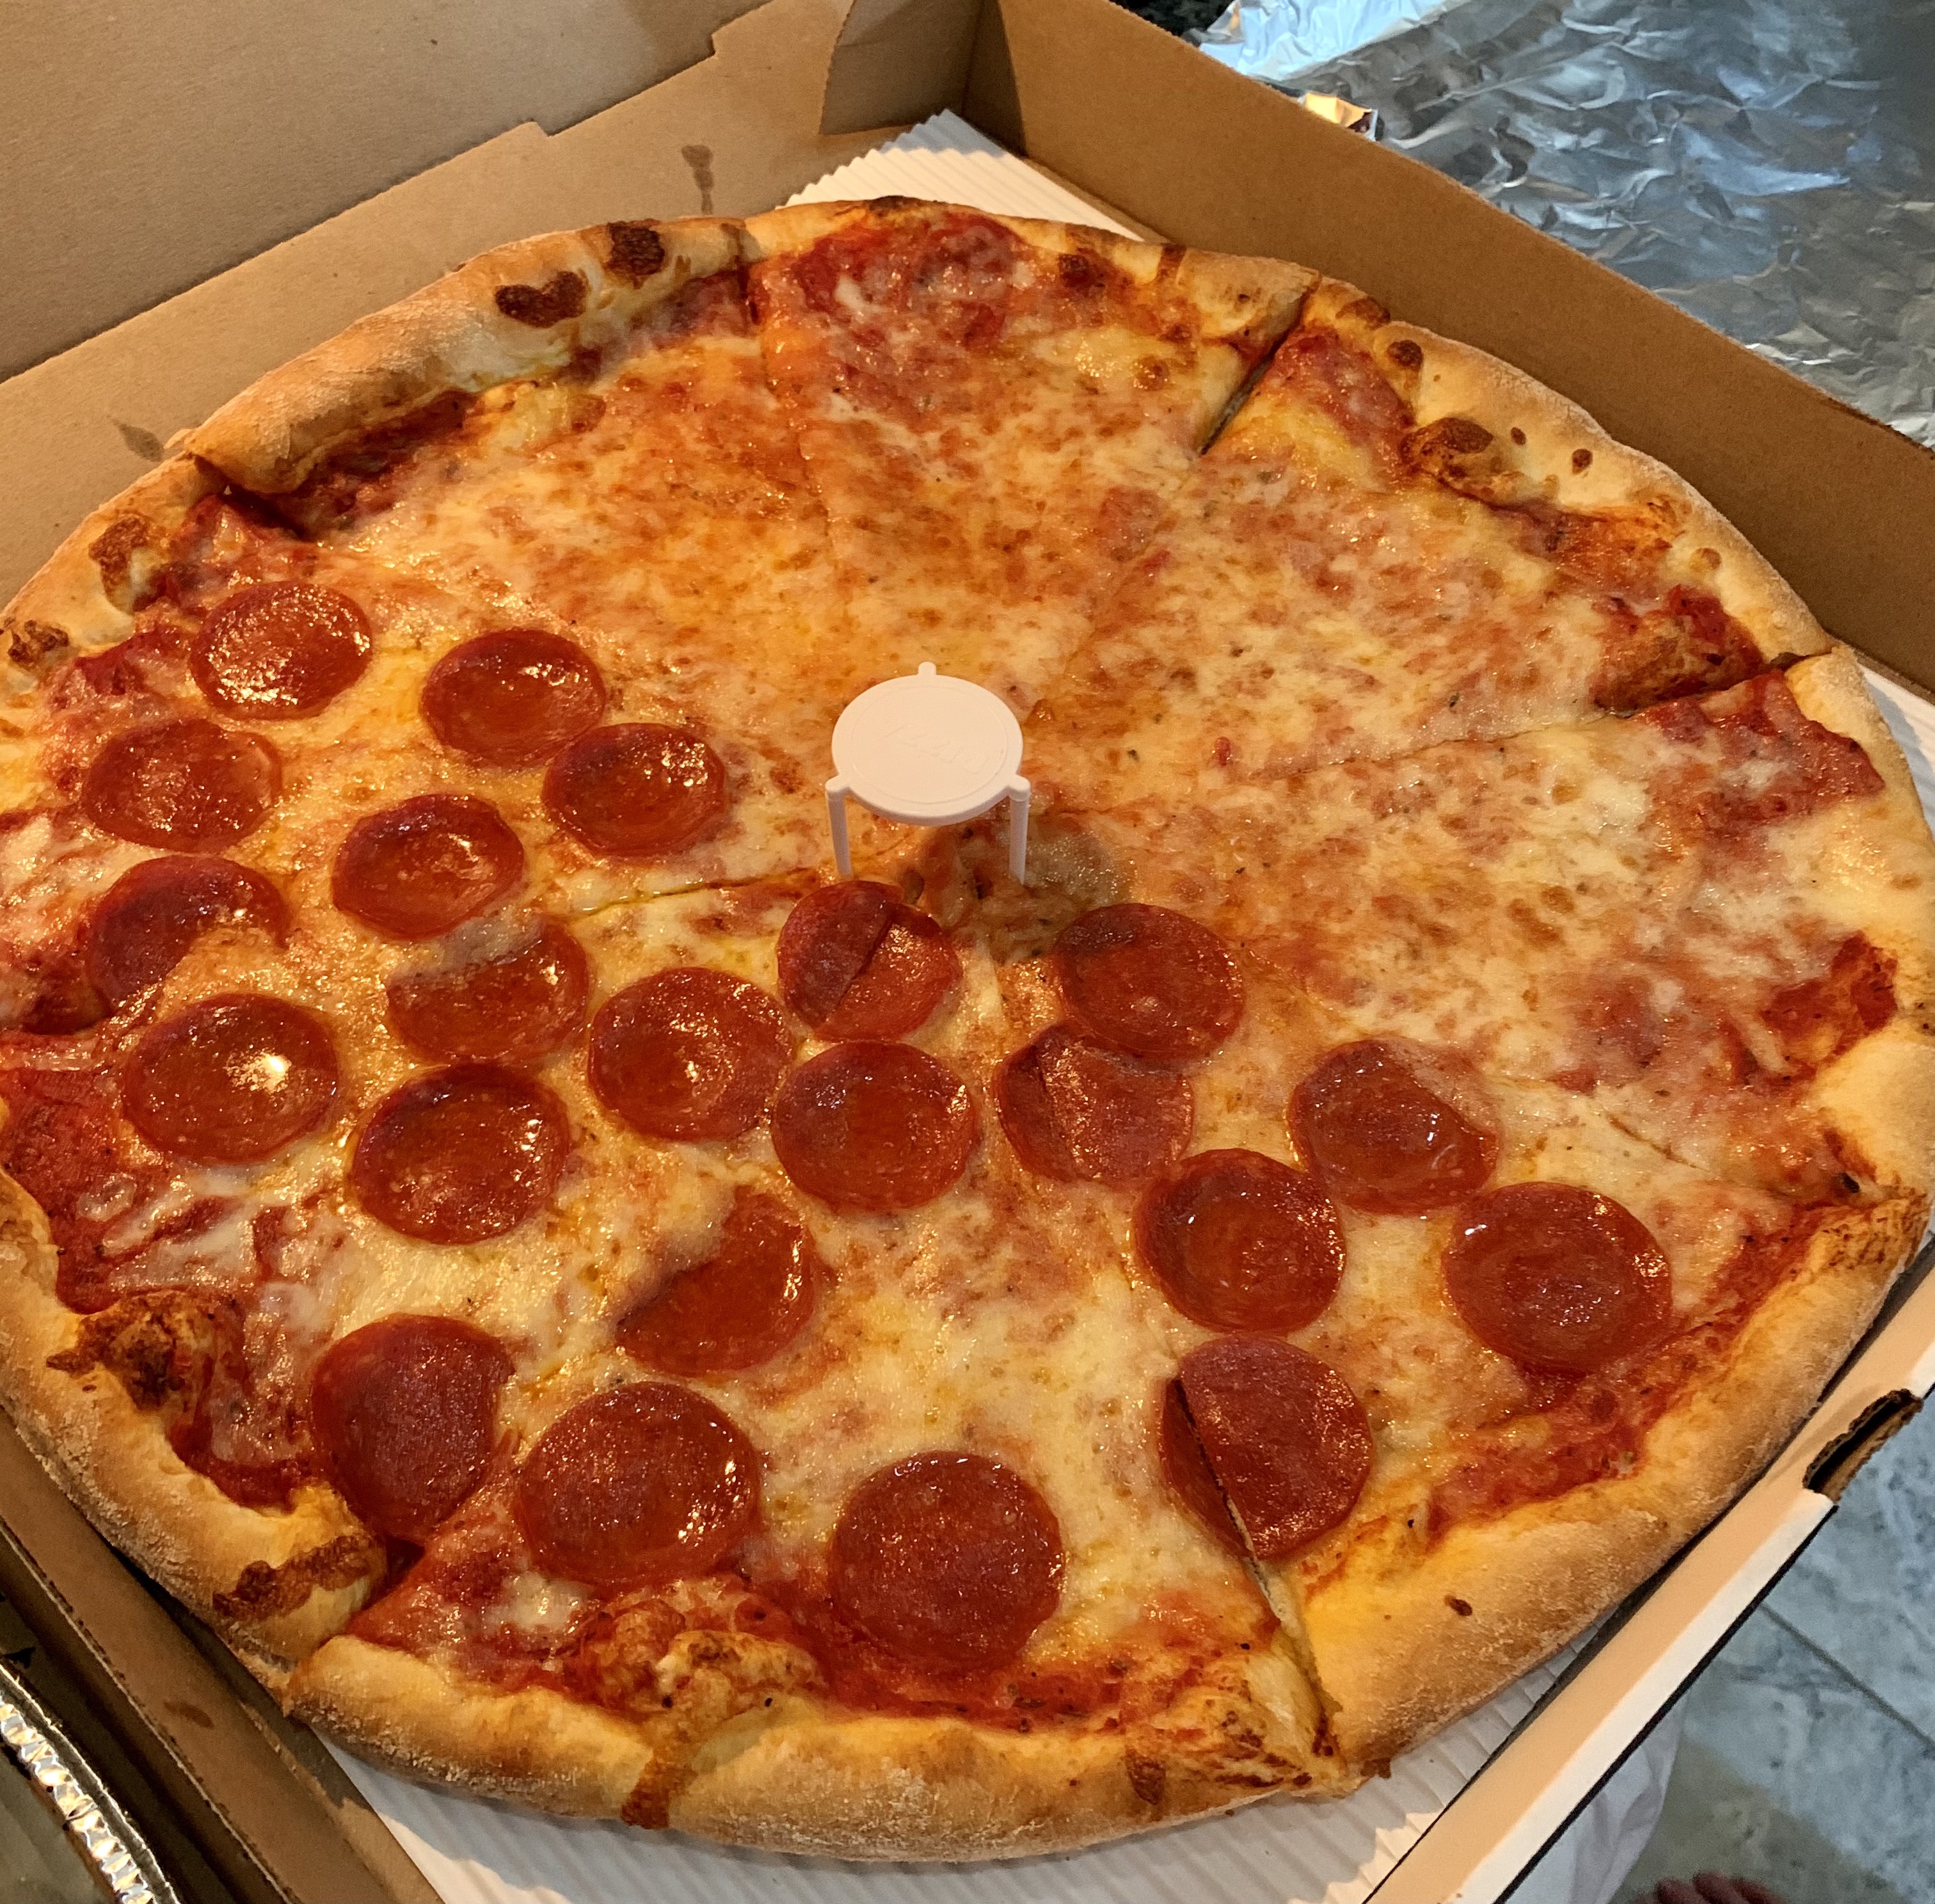 half pepperoni/half plain pizza from NJ!